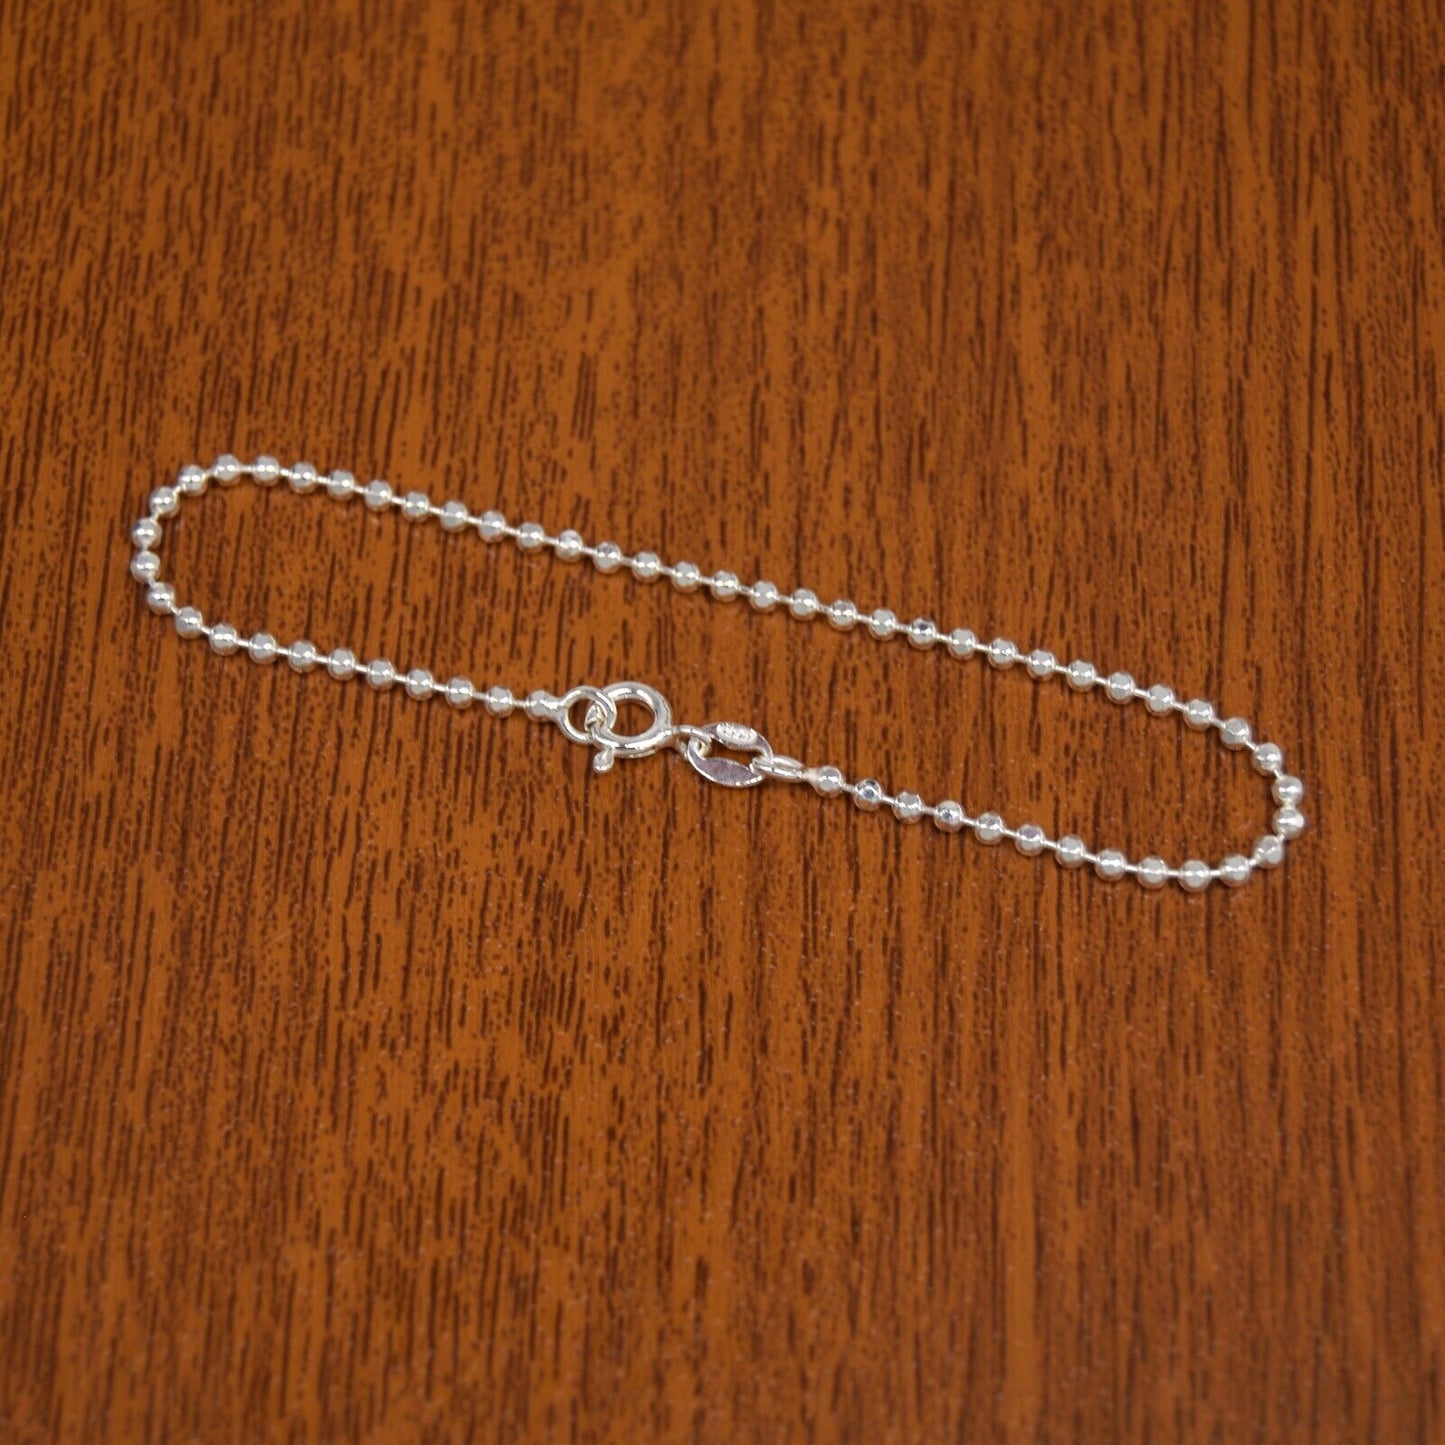 Genuine 925 Sterling Silver Diamond-Cut Ball Bead Bracelet